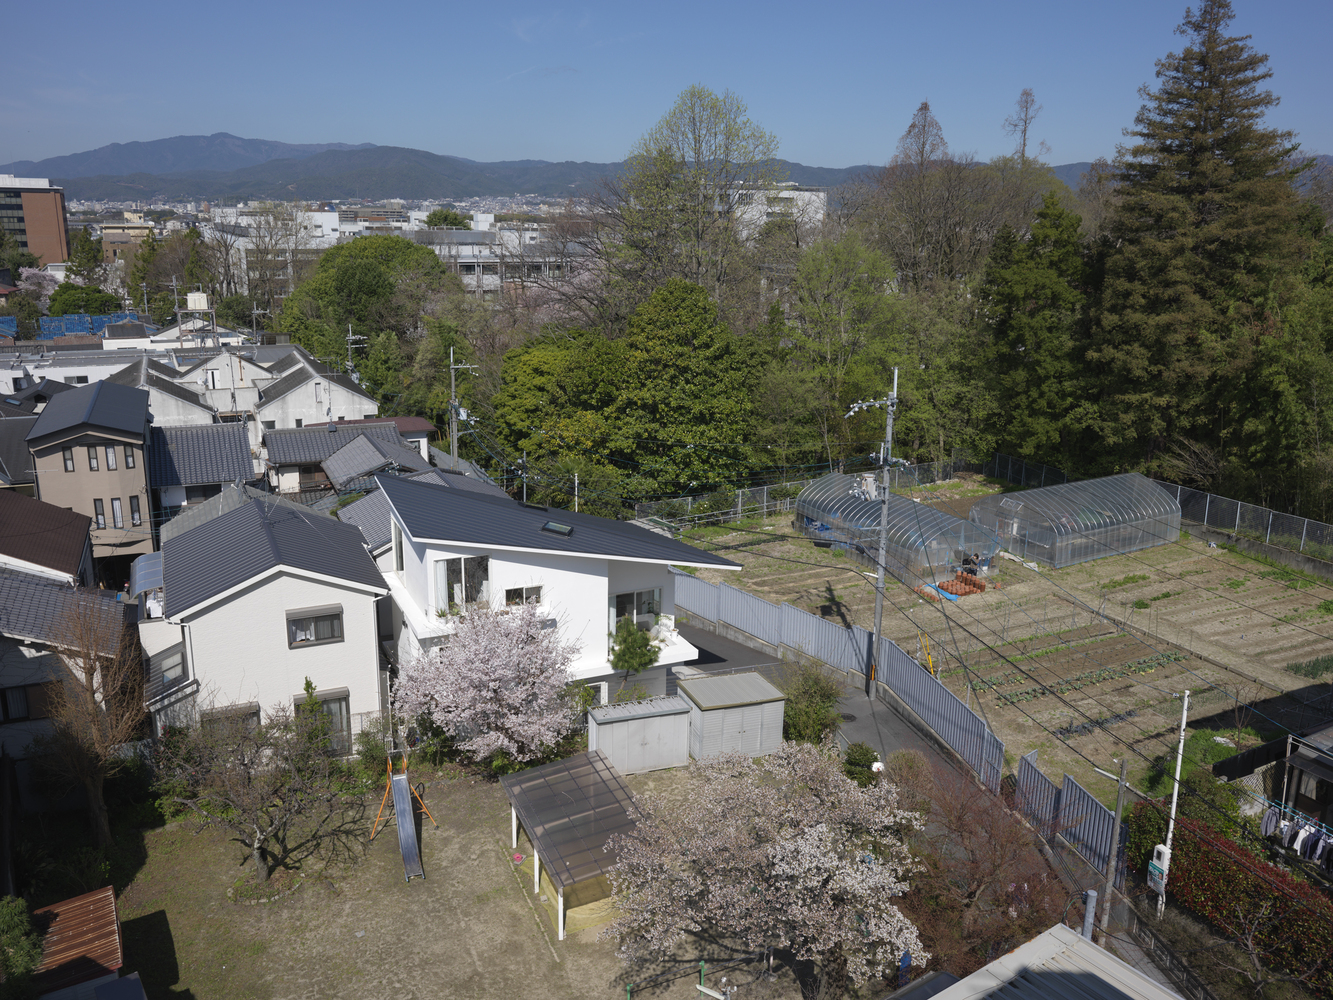 The Corner House in Kitashirakawa by UME architects